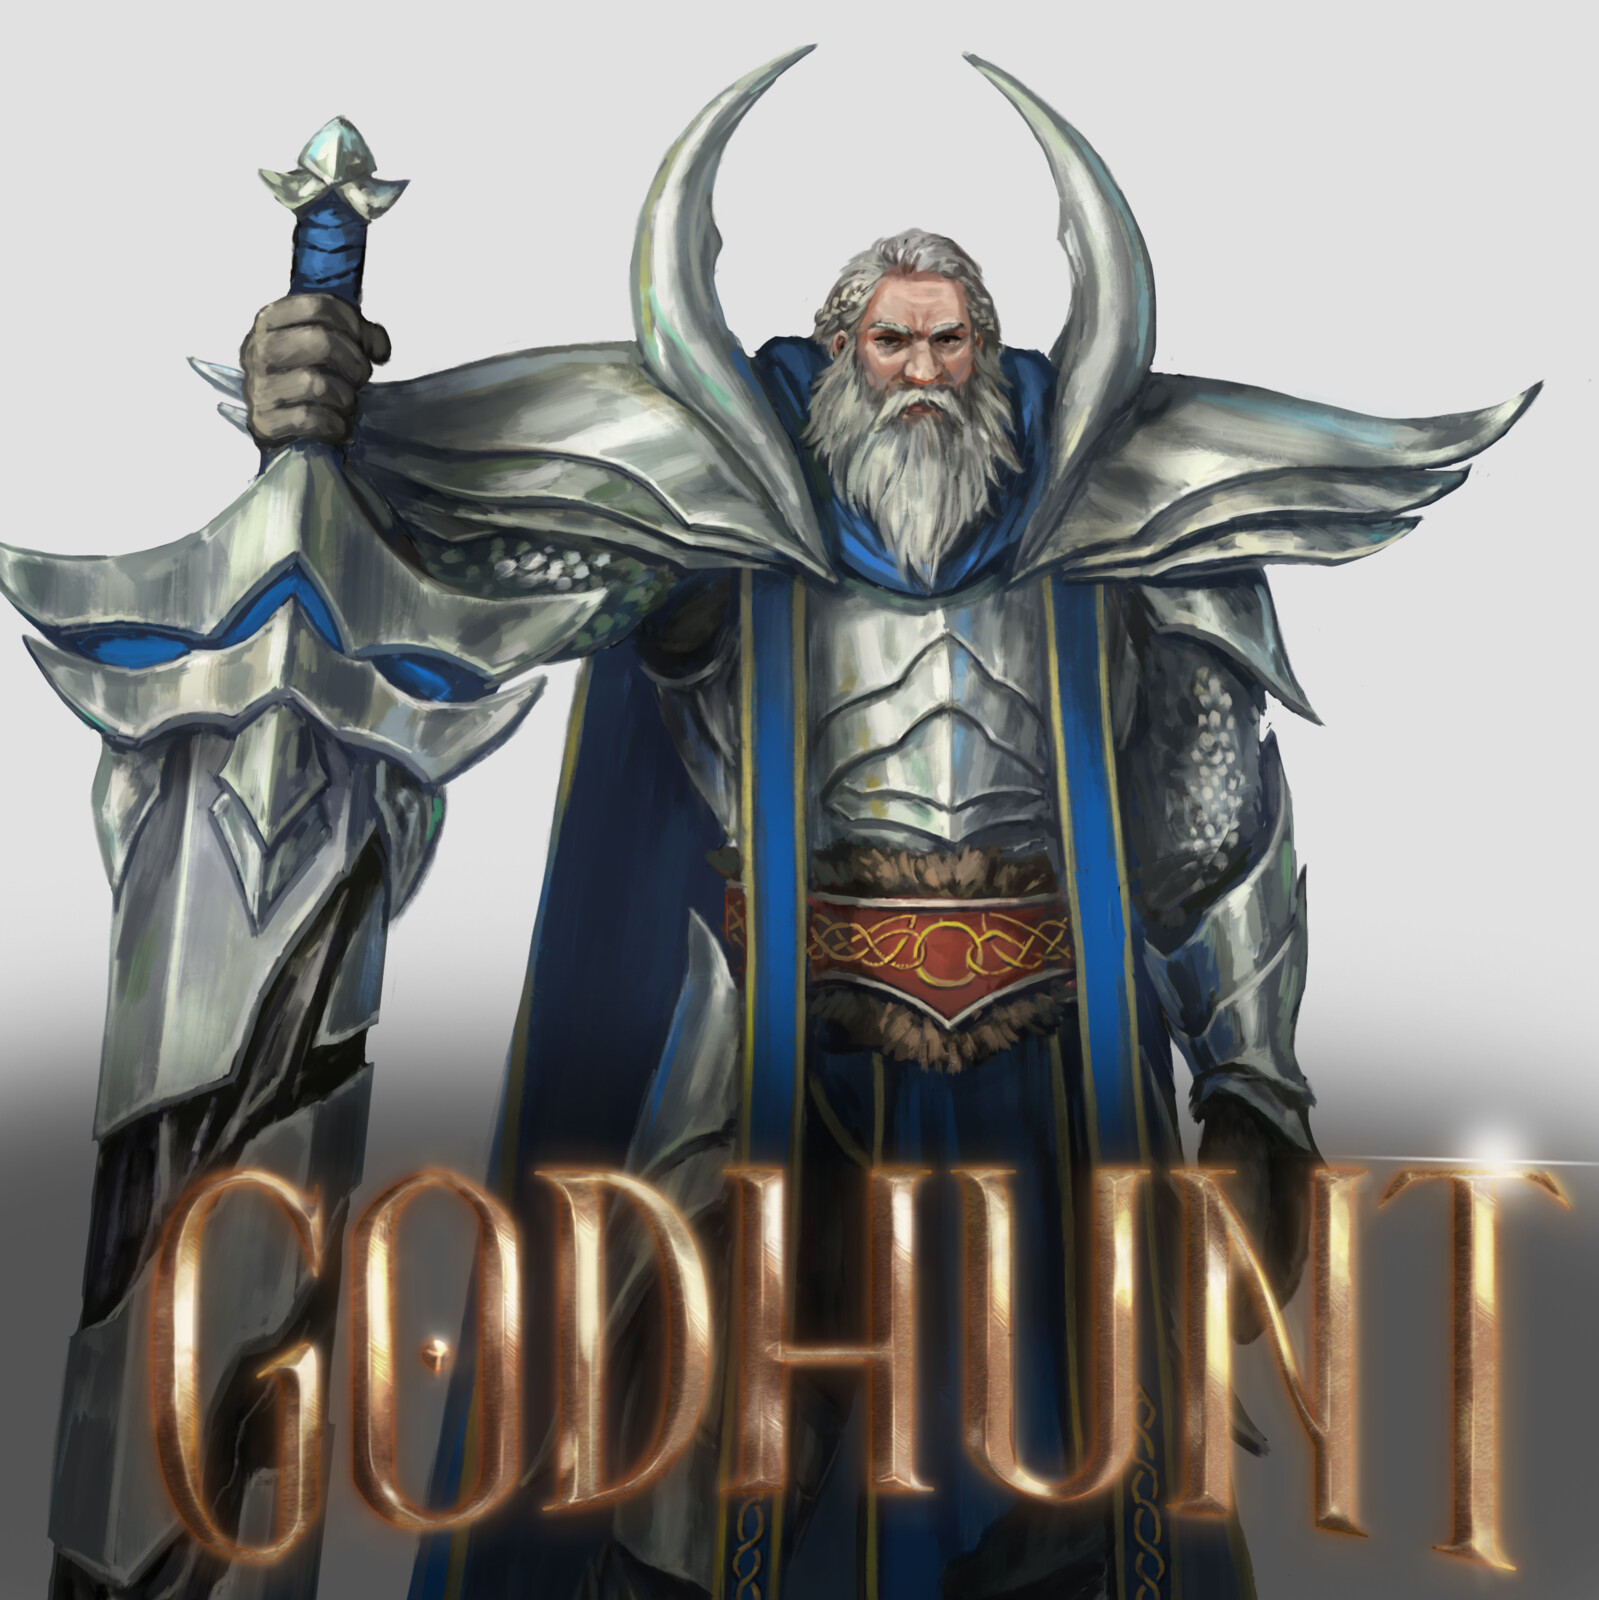 GODHUNT - Arn Concept 